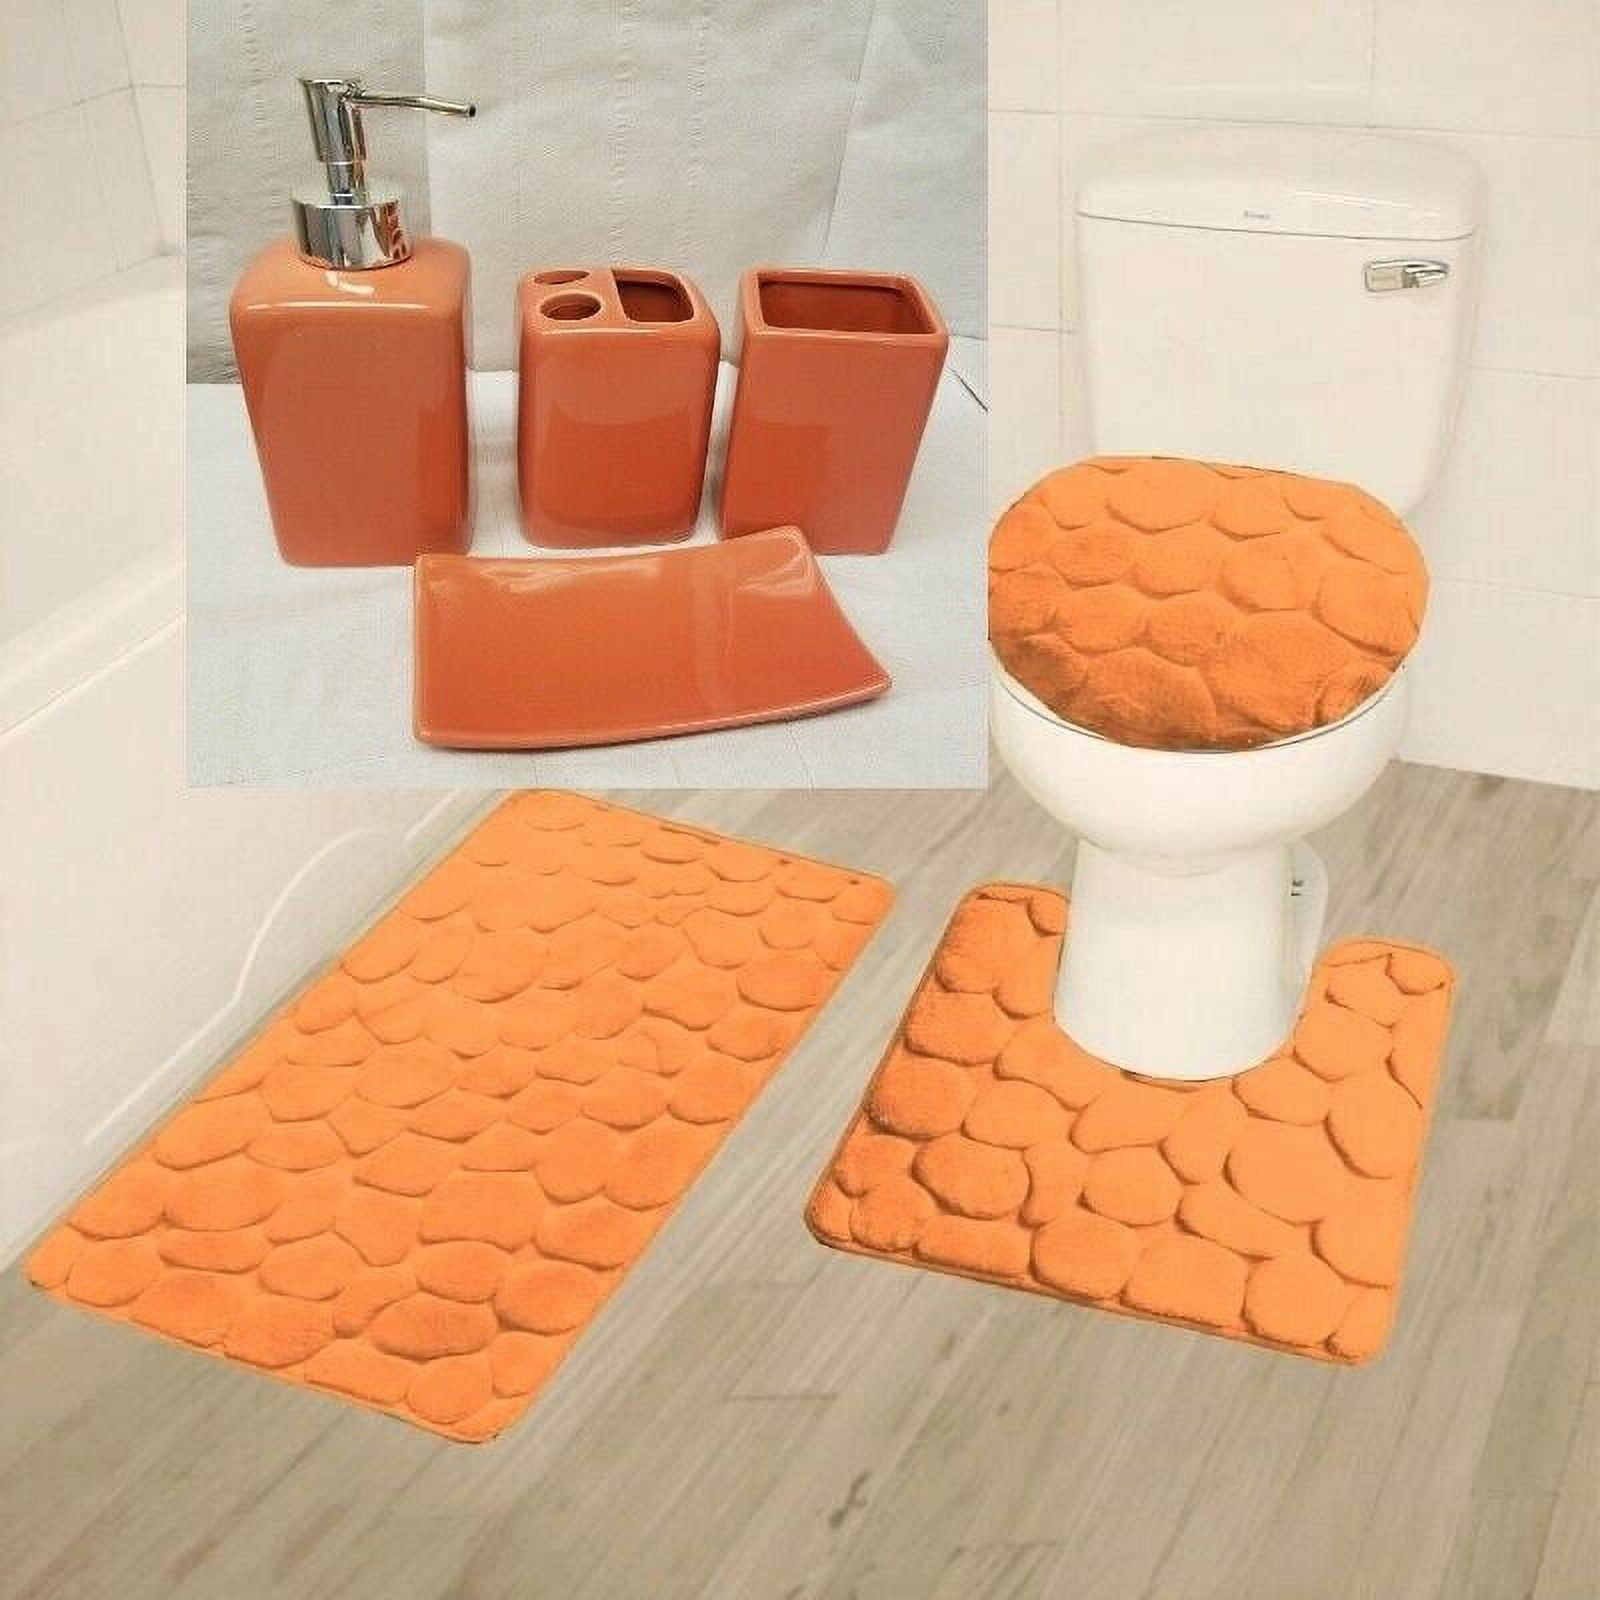 Smiry Memory Foam Bathroom rugs Toilet mats, U-Shaped Contour